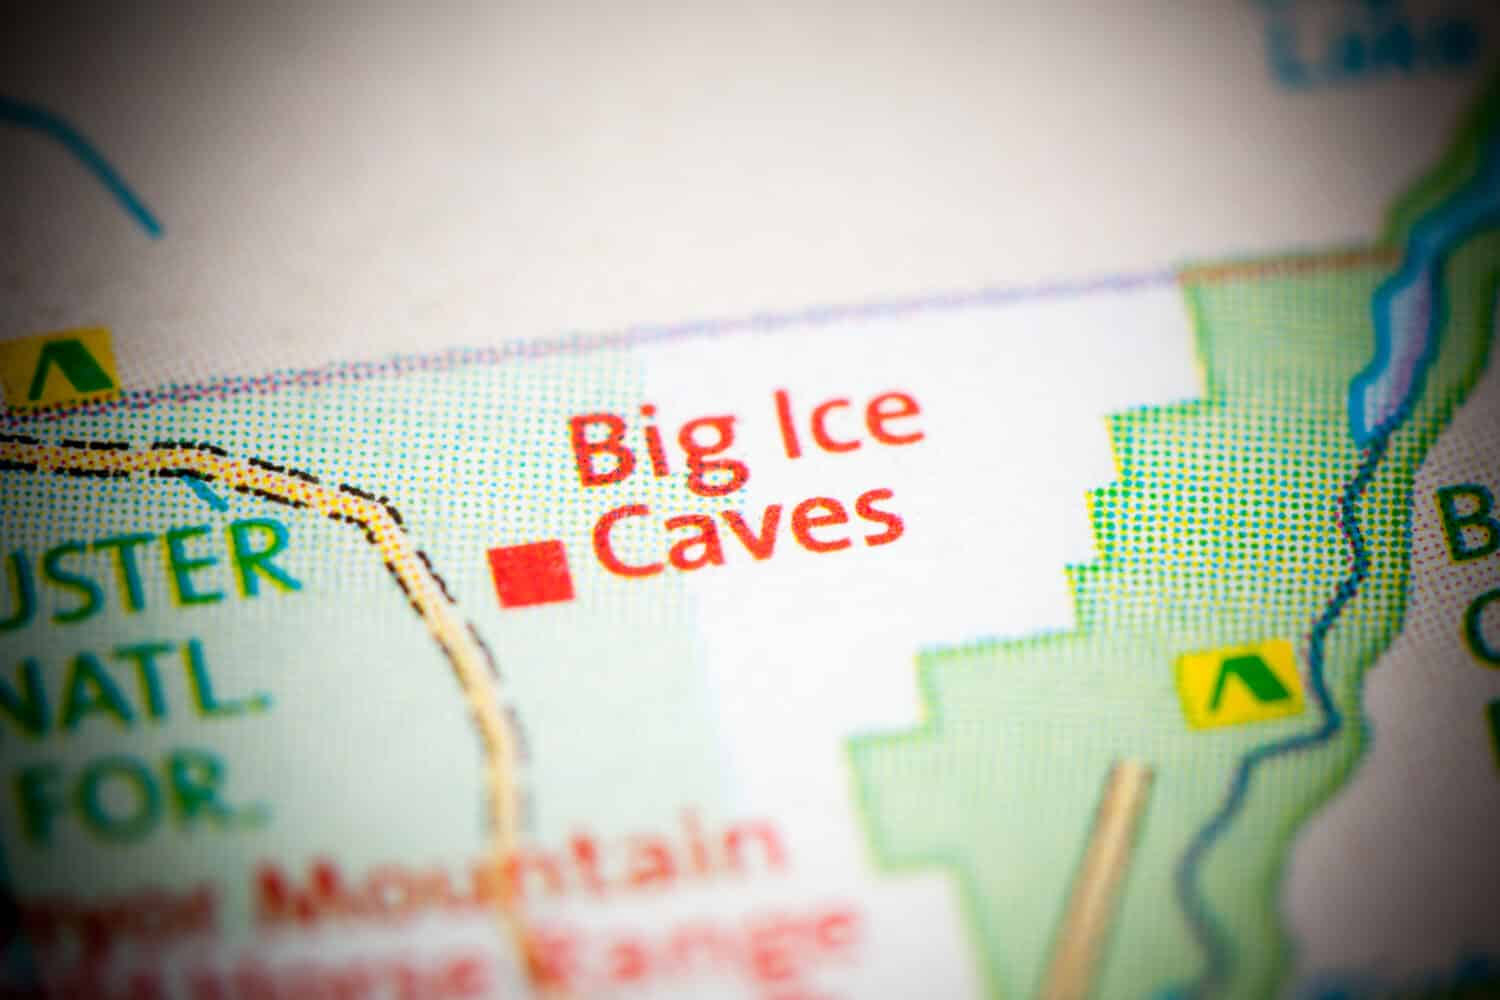 Big Ice Caves. Montana on a map.